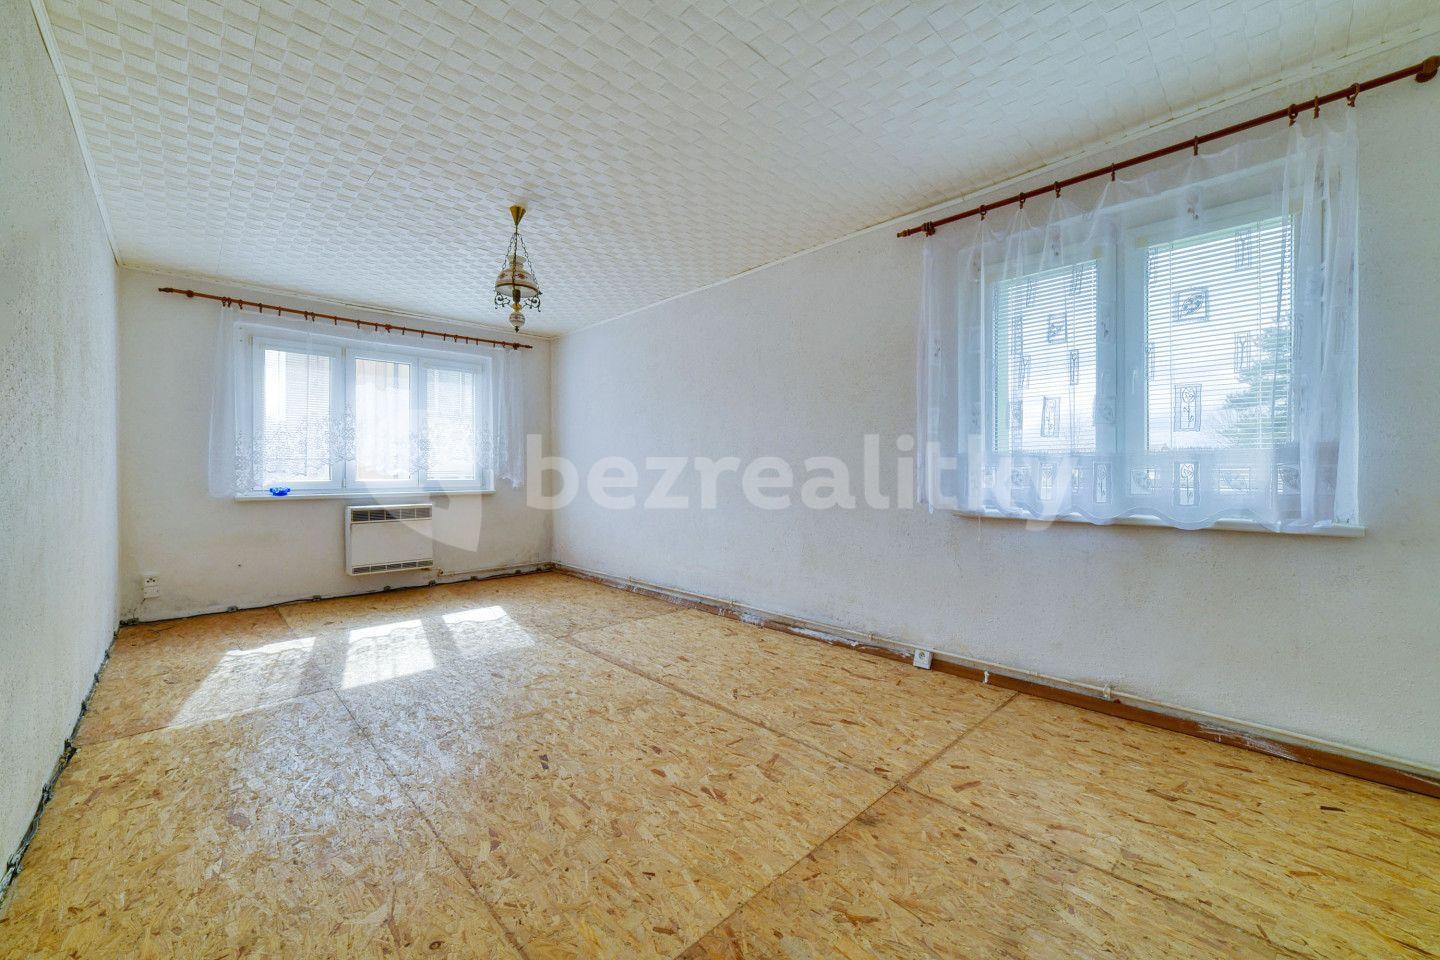 2 bedroom flat for sale, 55 m², Toužim, Karlovarský Region